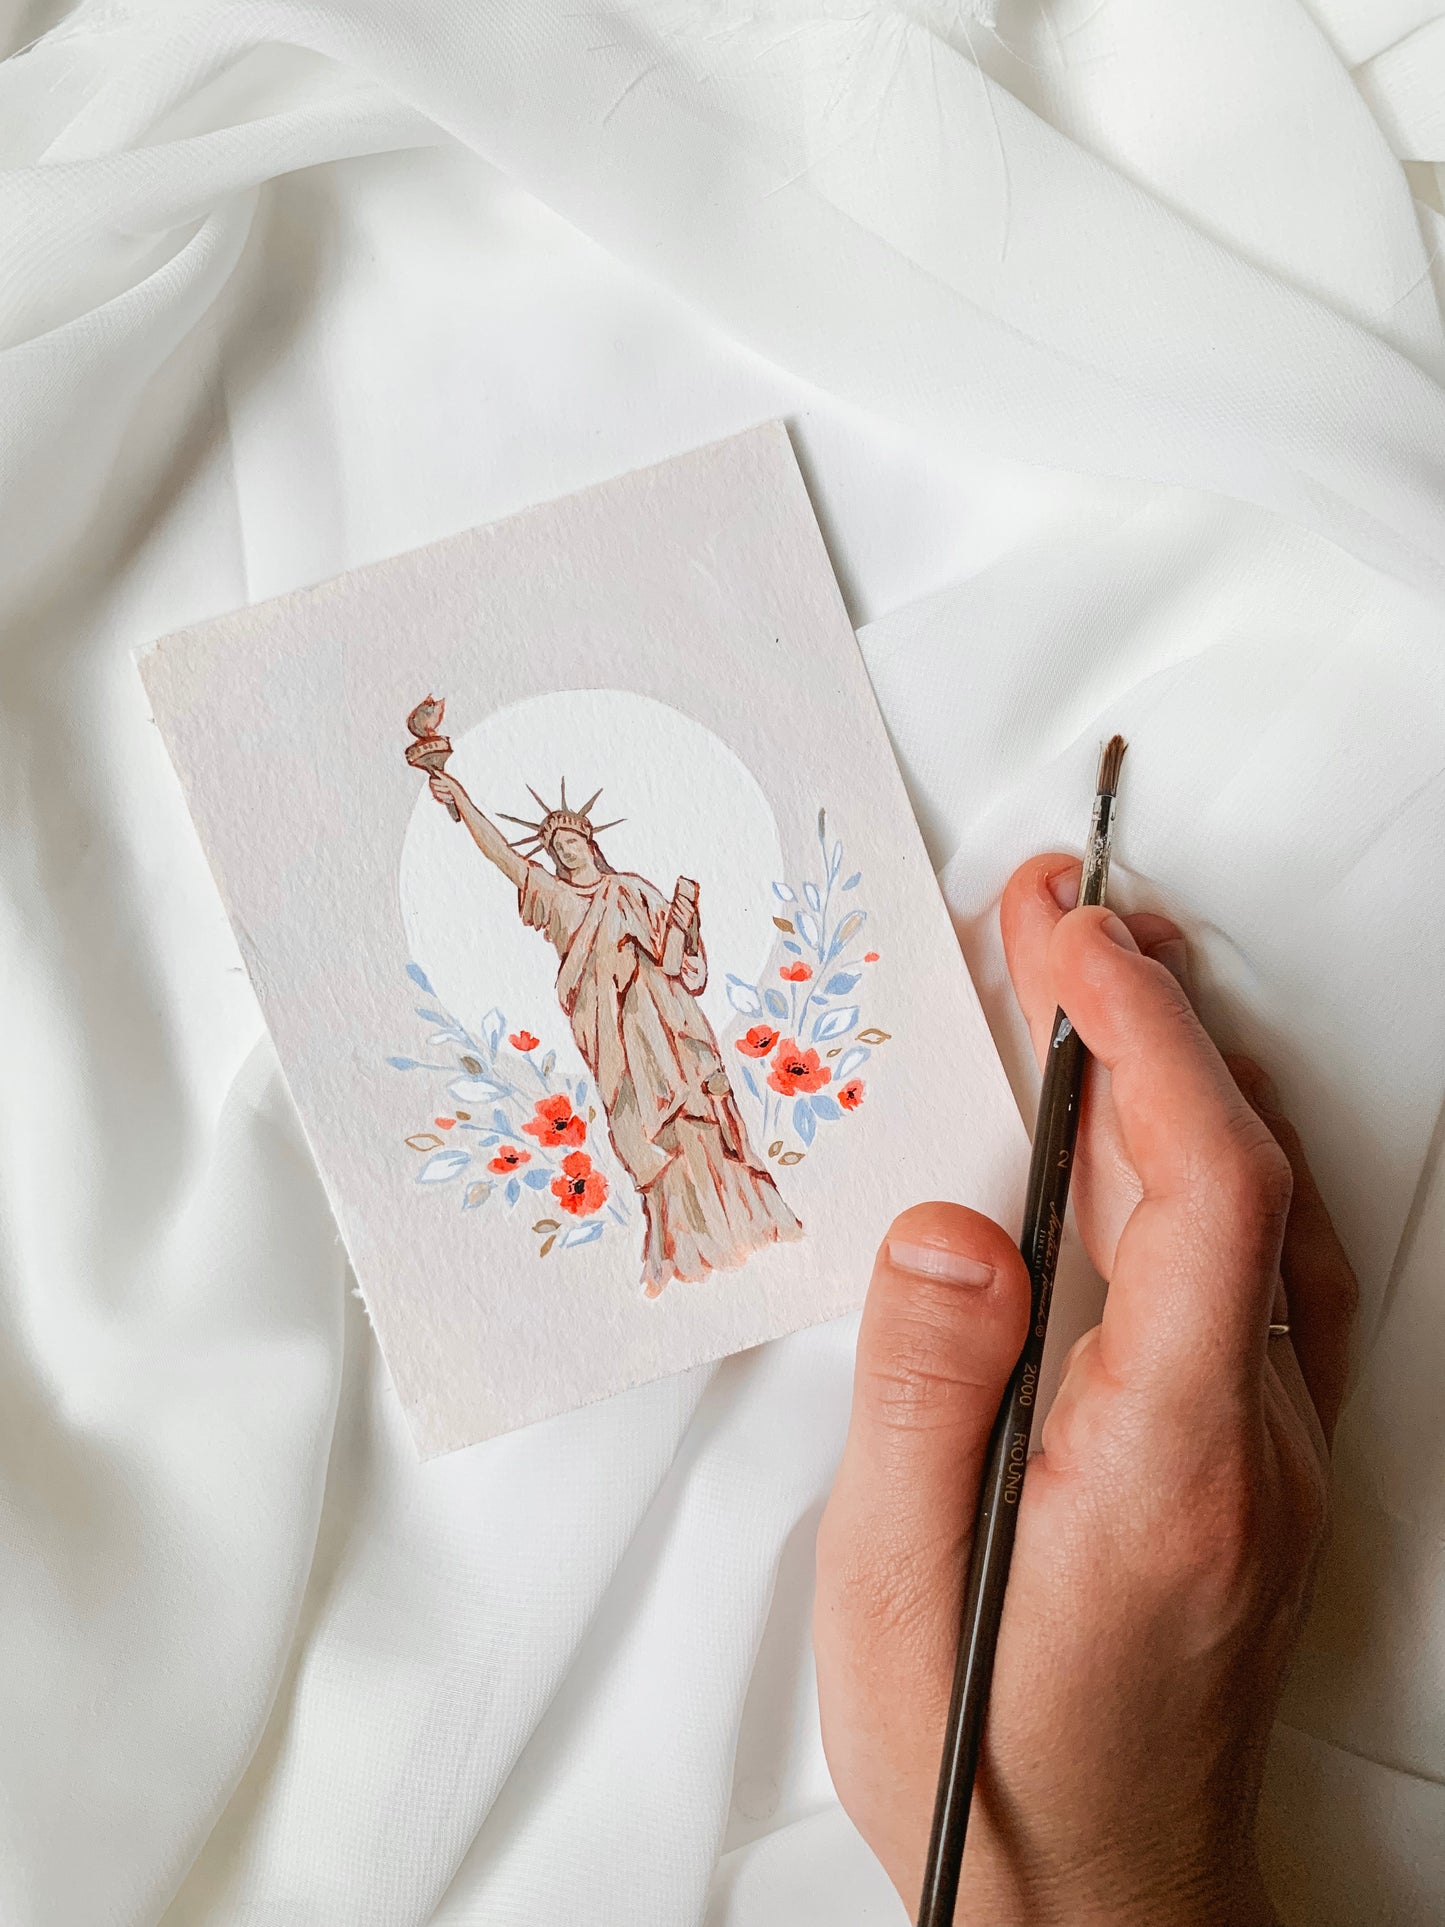 'Lady Liberty' 4x5 original painting